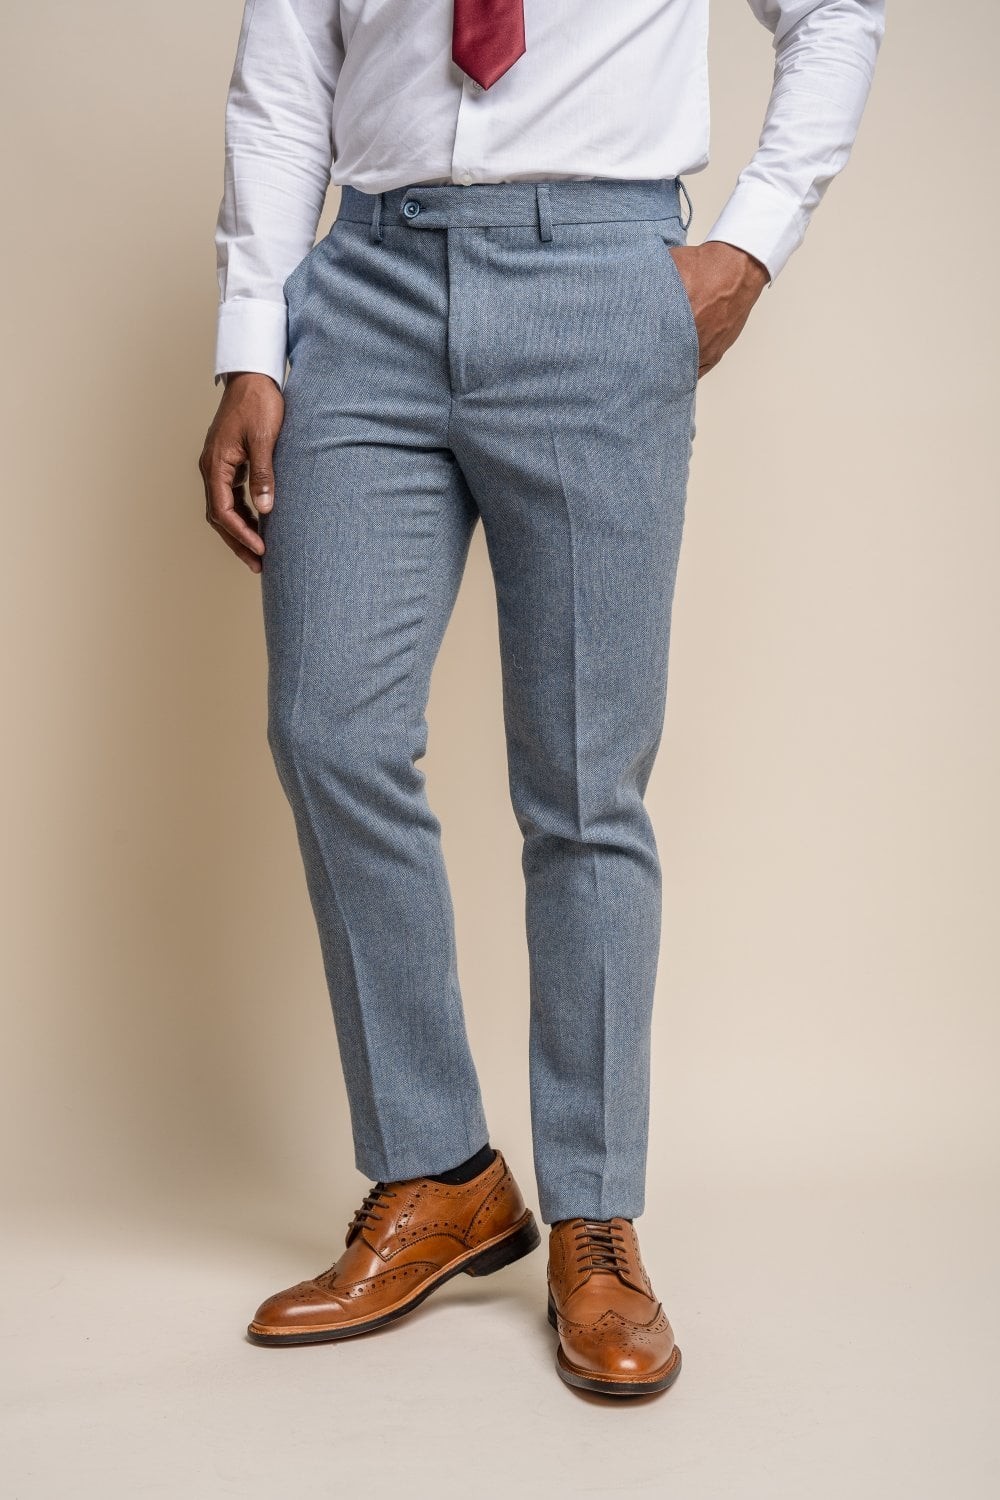 Pantalon Slim en Tweed Bleu pour Homme - WELLS